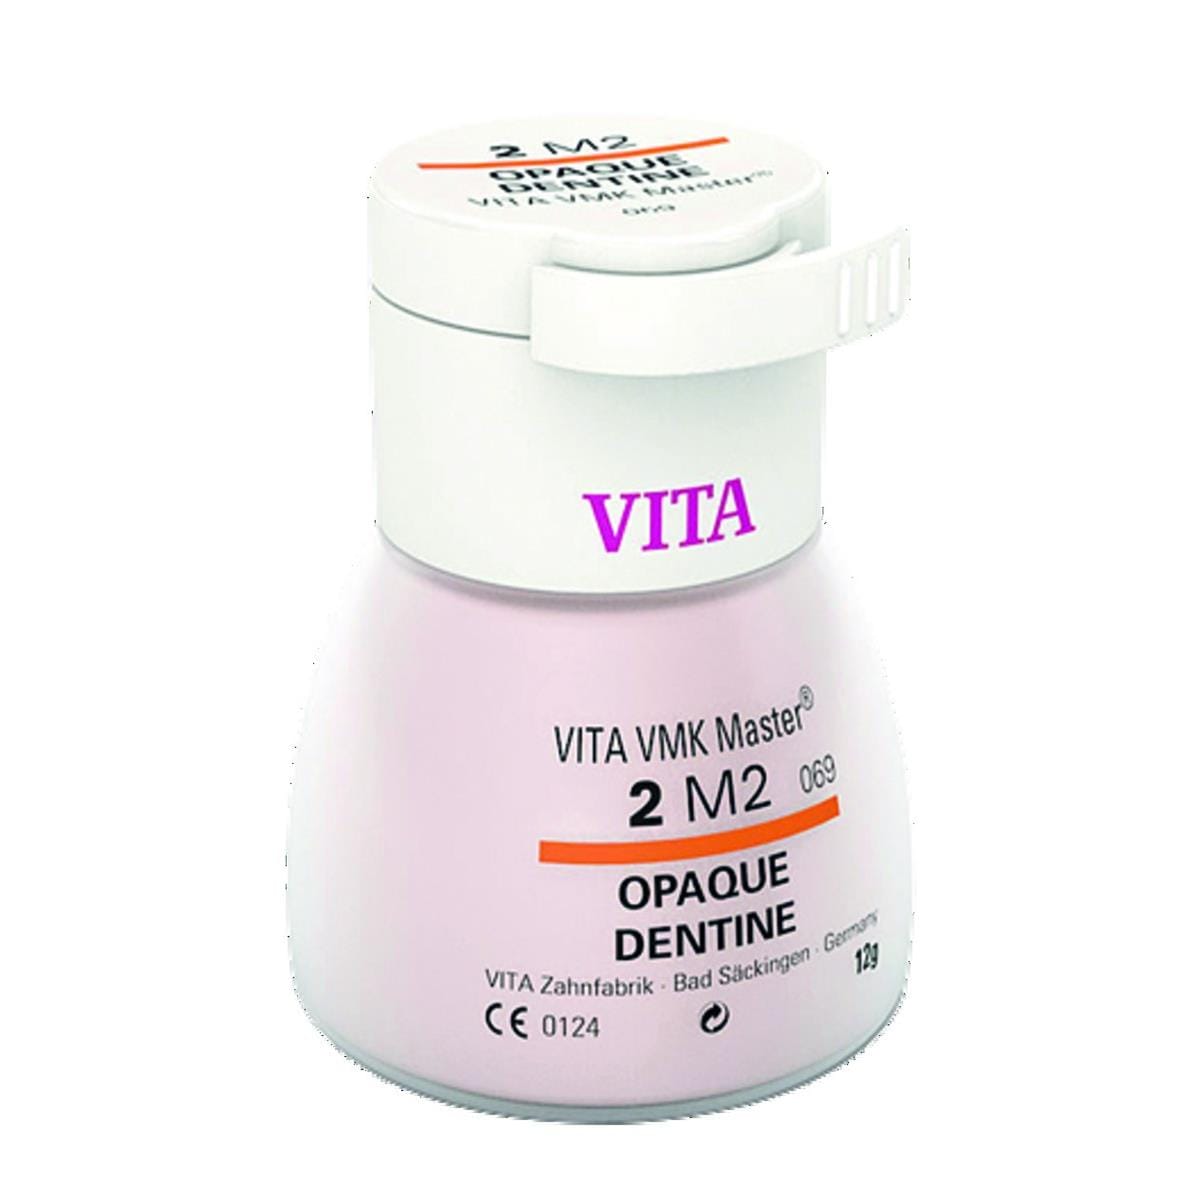 VMK Master VITA - Dentine Opaque - 0M3 - Le flacon de 12 g